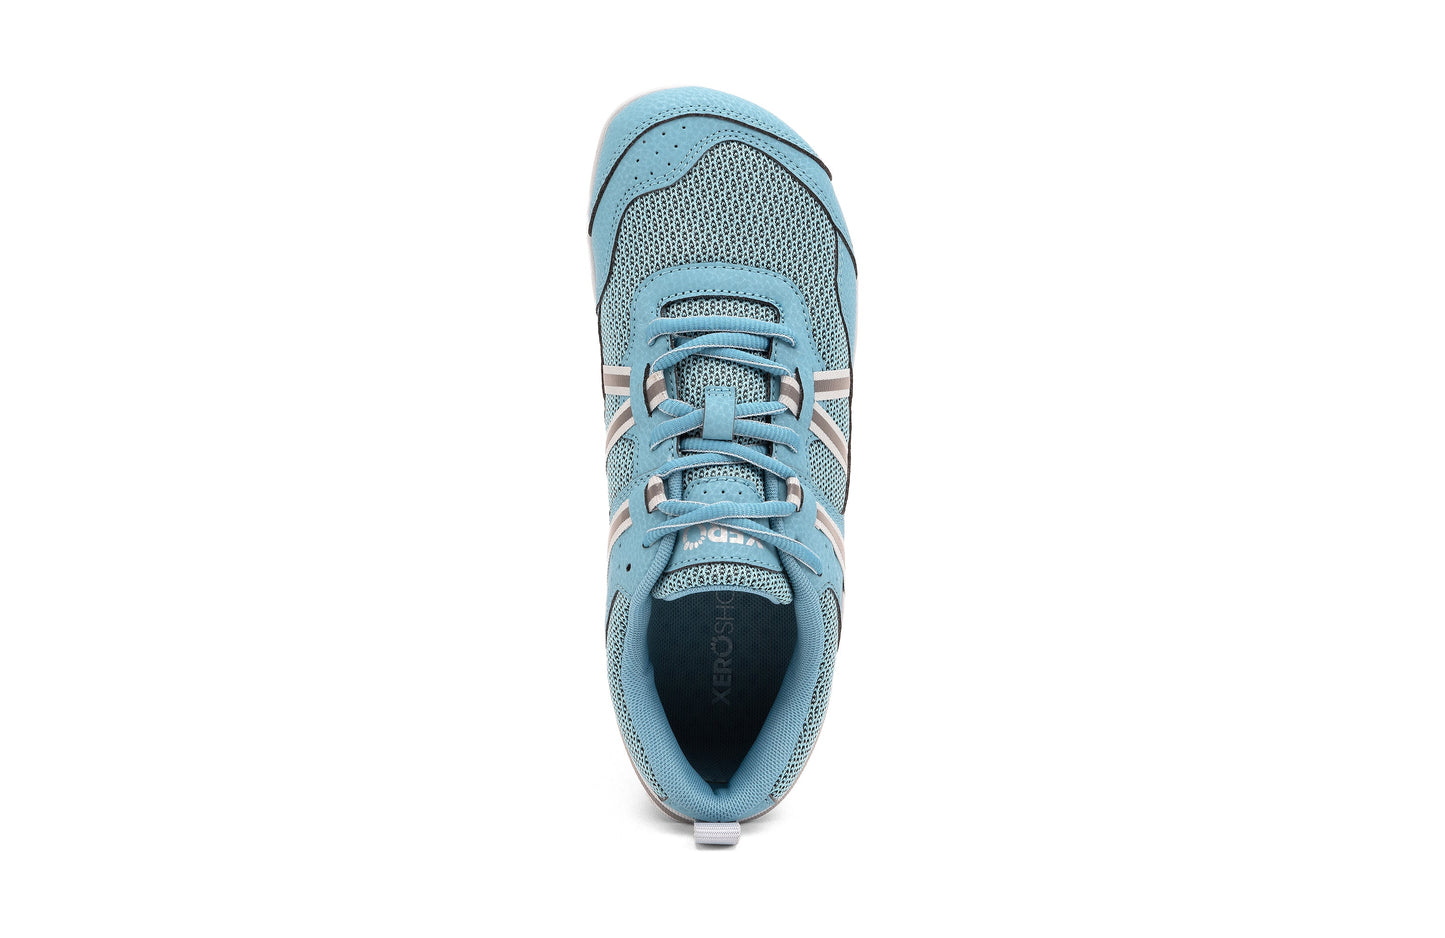 Mærkbare Prio Womens barfods sneakers til kvinder i farven delphinium blue, top